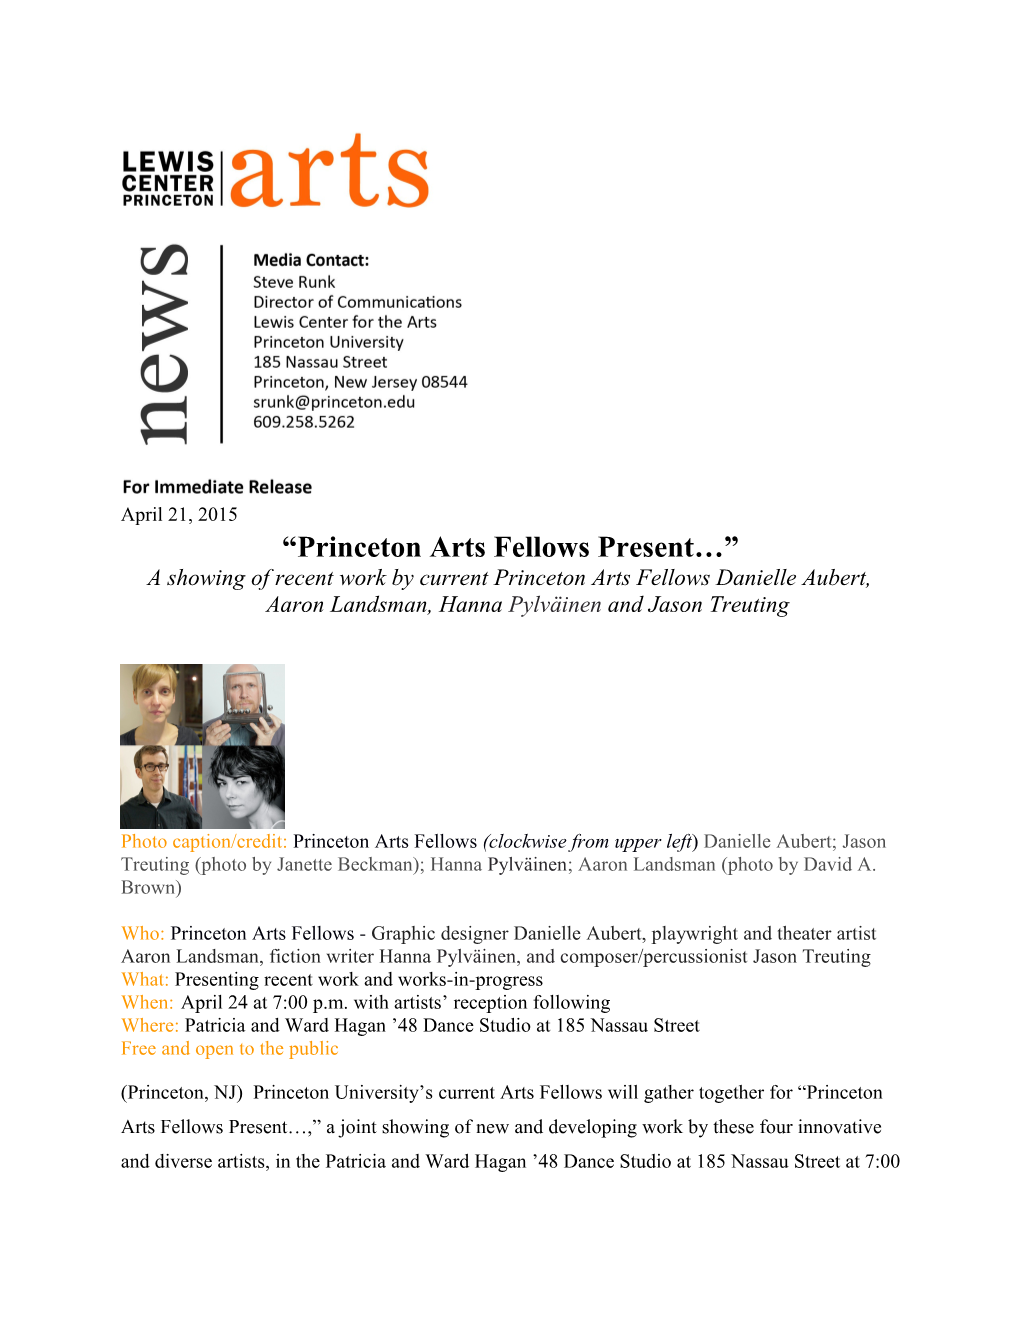 Princeton Arts Fellows Present